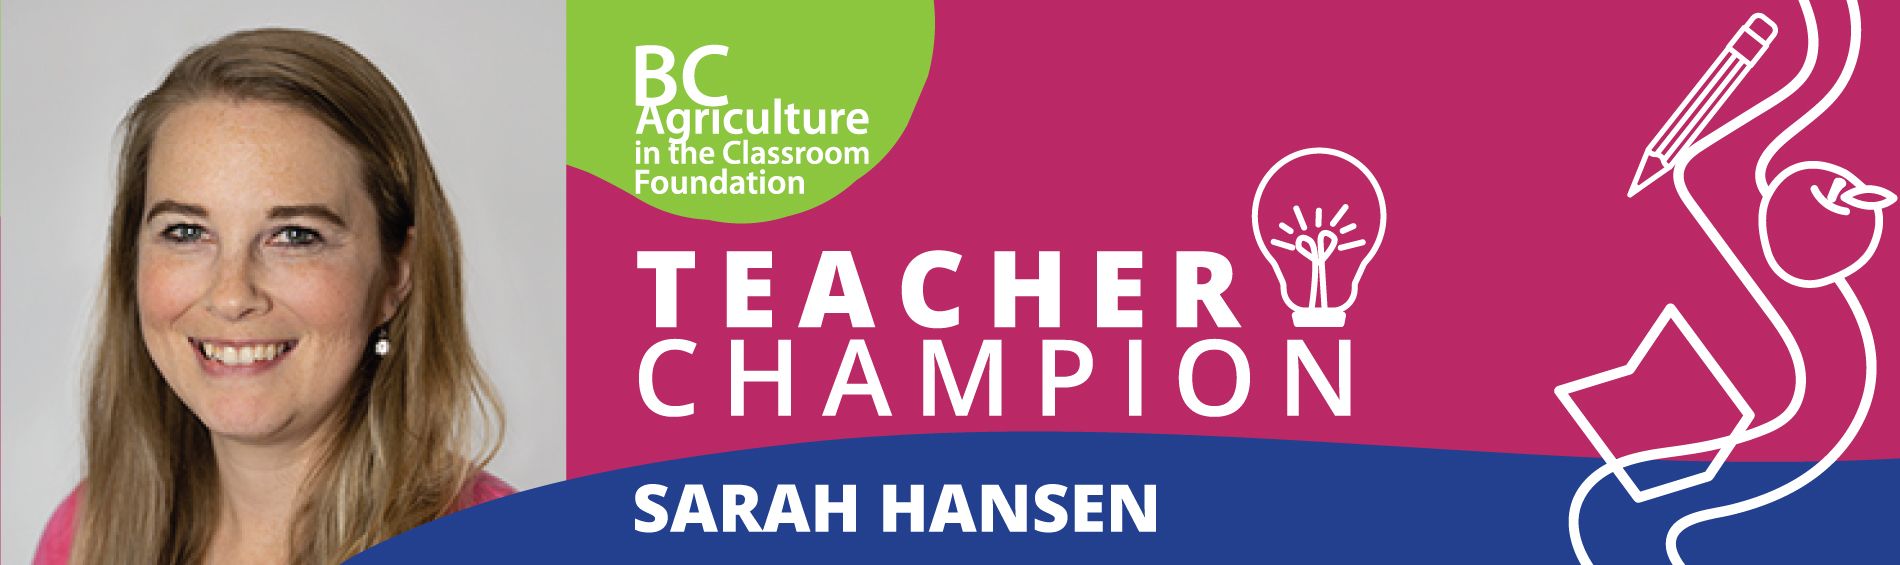 Teacher Champion - Sarah Hansen